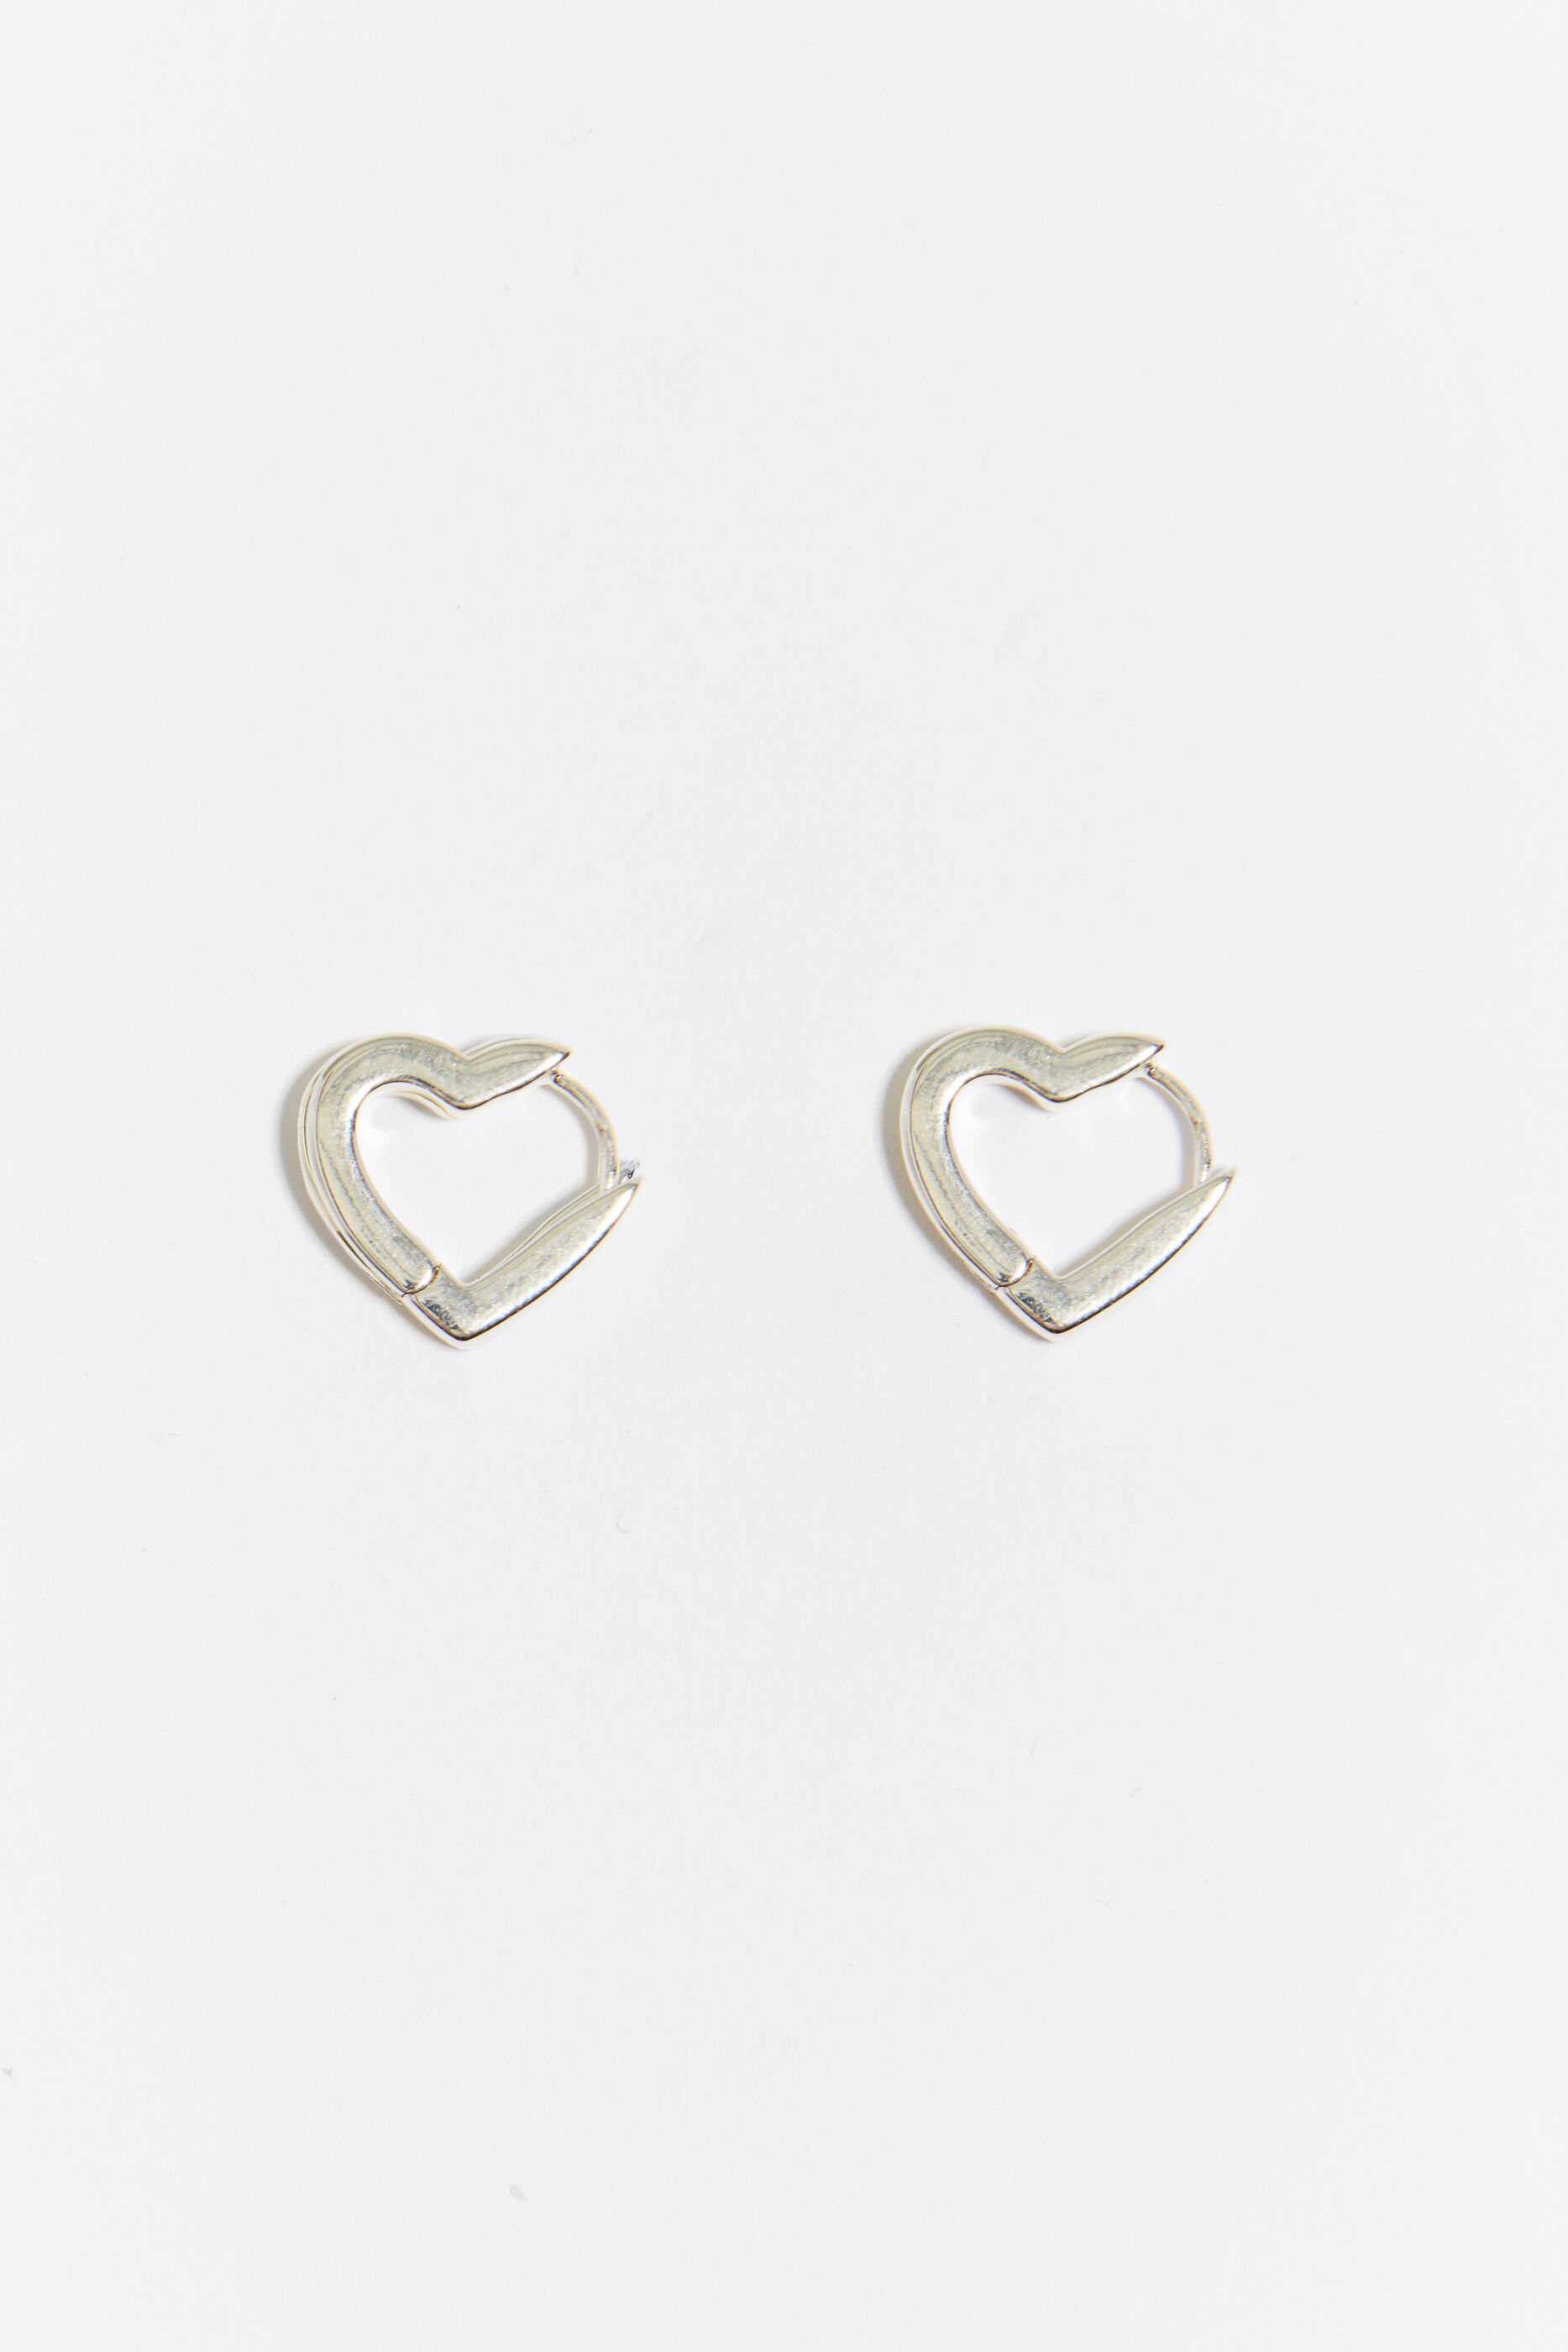 Amazon.com: Silver Heart Earrings Heart Shaped Stud Earrings 925 Sterling Silver  Earrings for Women Valentine's Day Fashion Chunky Heart Jewelry : Handmade  Products